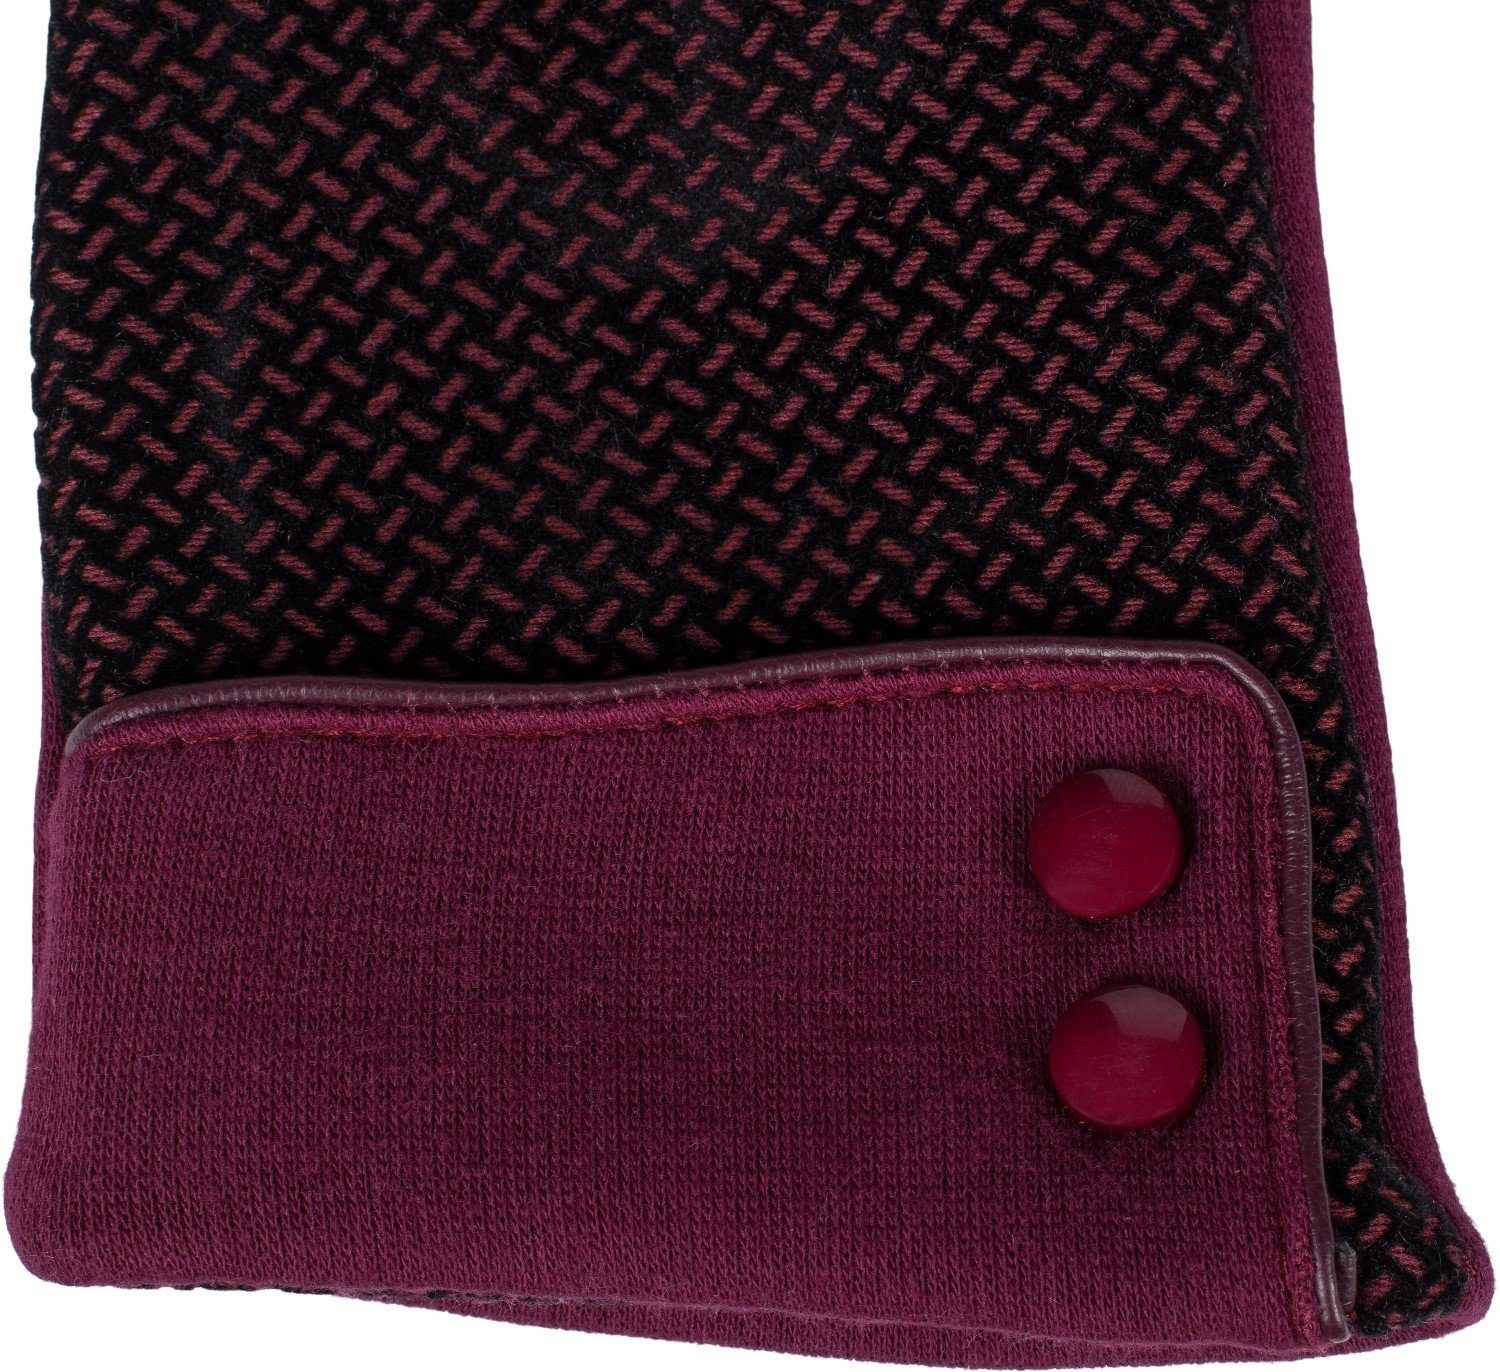 mit Muster Handschuhe Touchscreen styleBREAKER Baumwollhandschuhe Riffel weichem Bordeaux-Rot